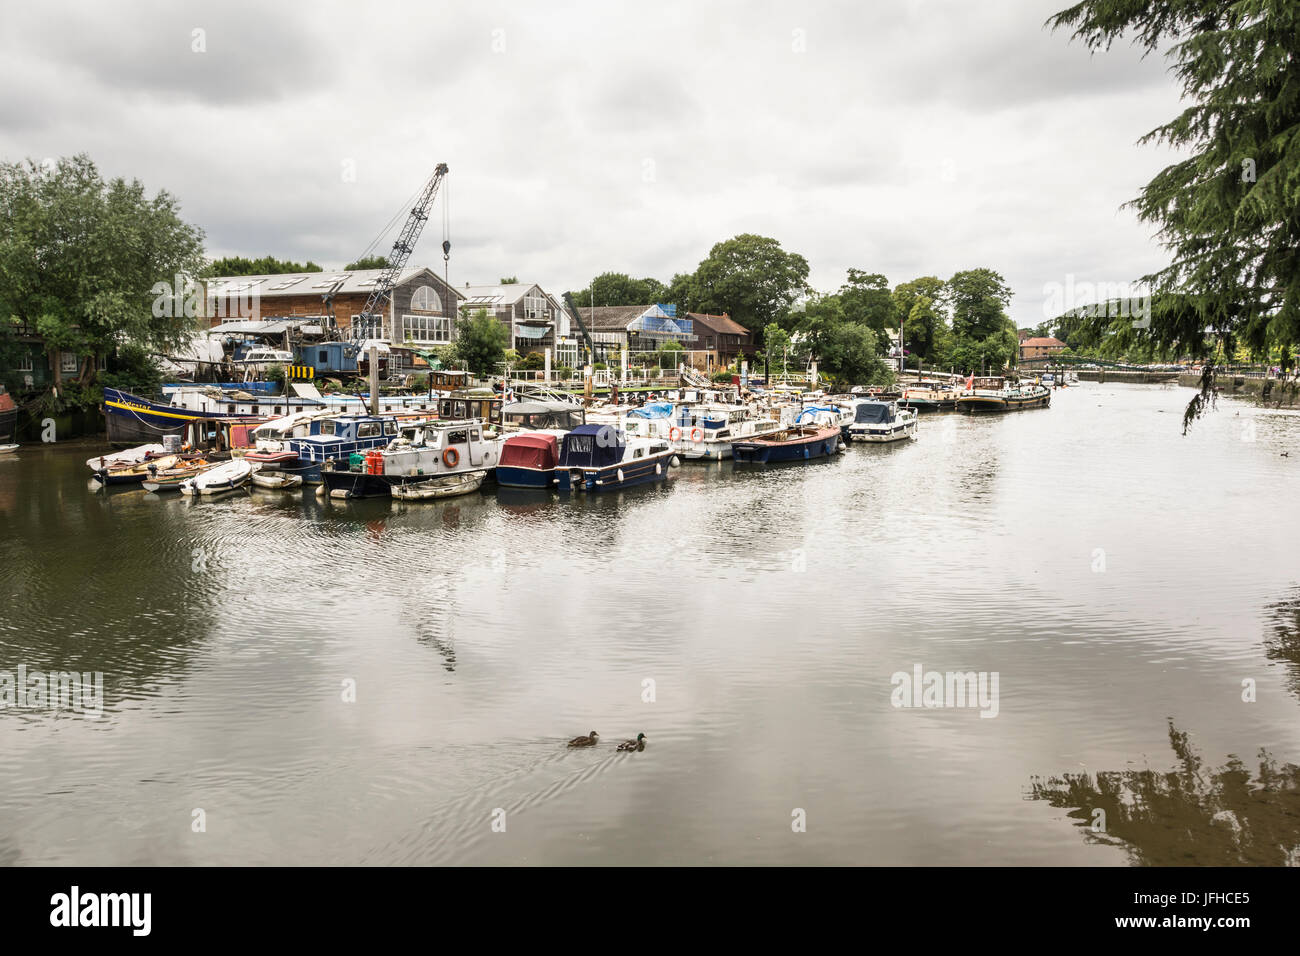 View of the River Thames at Eel Pie Island, Twickenham, London UK Stock Photo